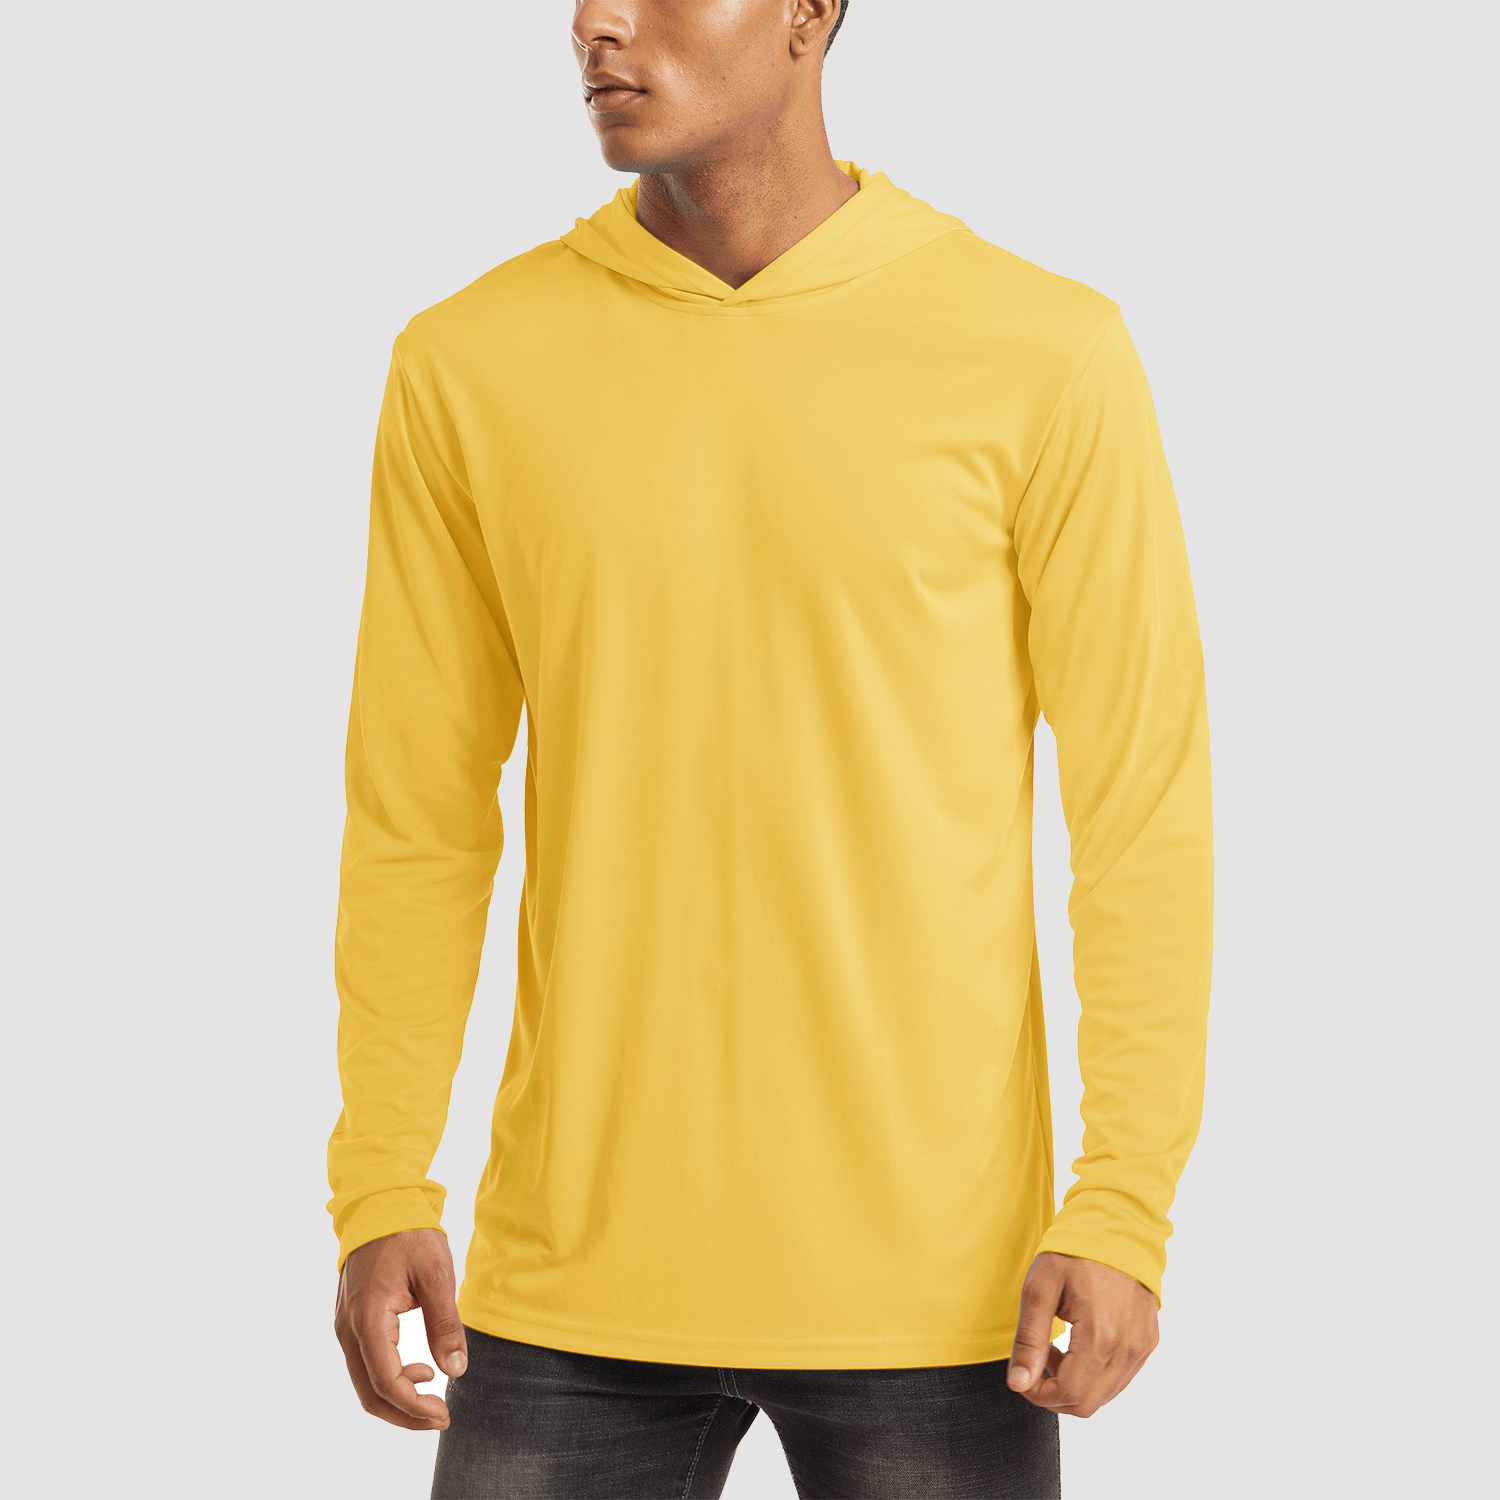 Yellow Fishing Shirts & Tops for Women for sale